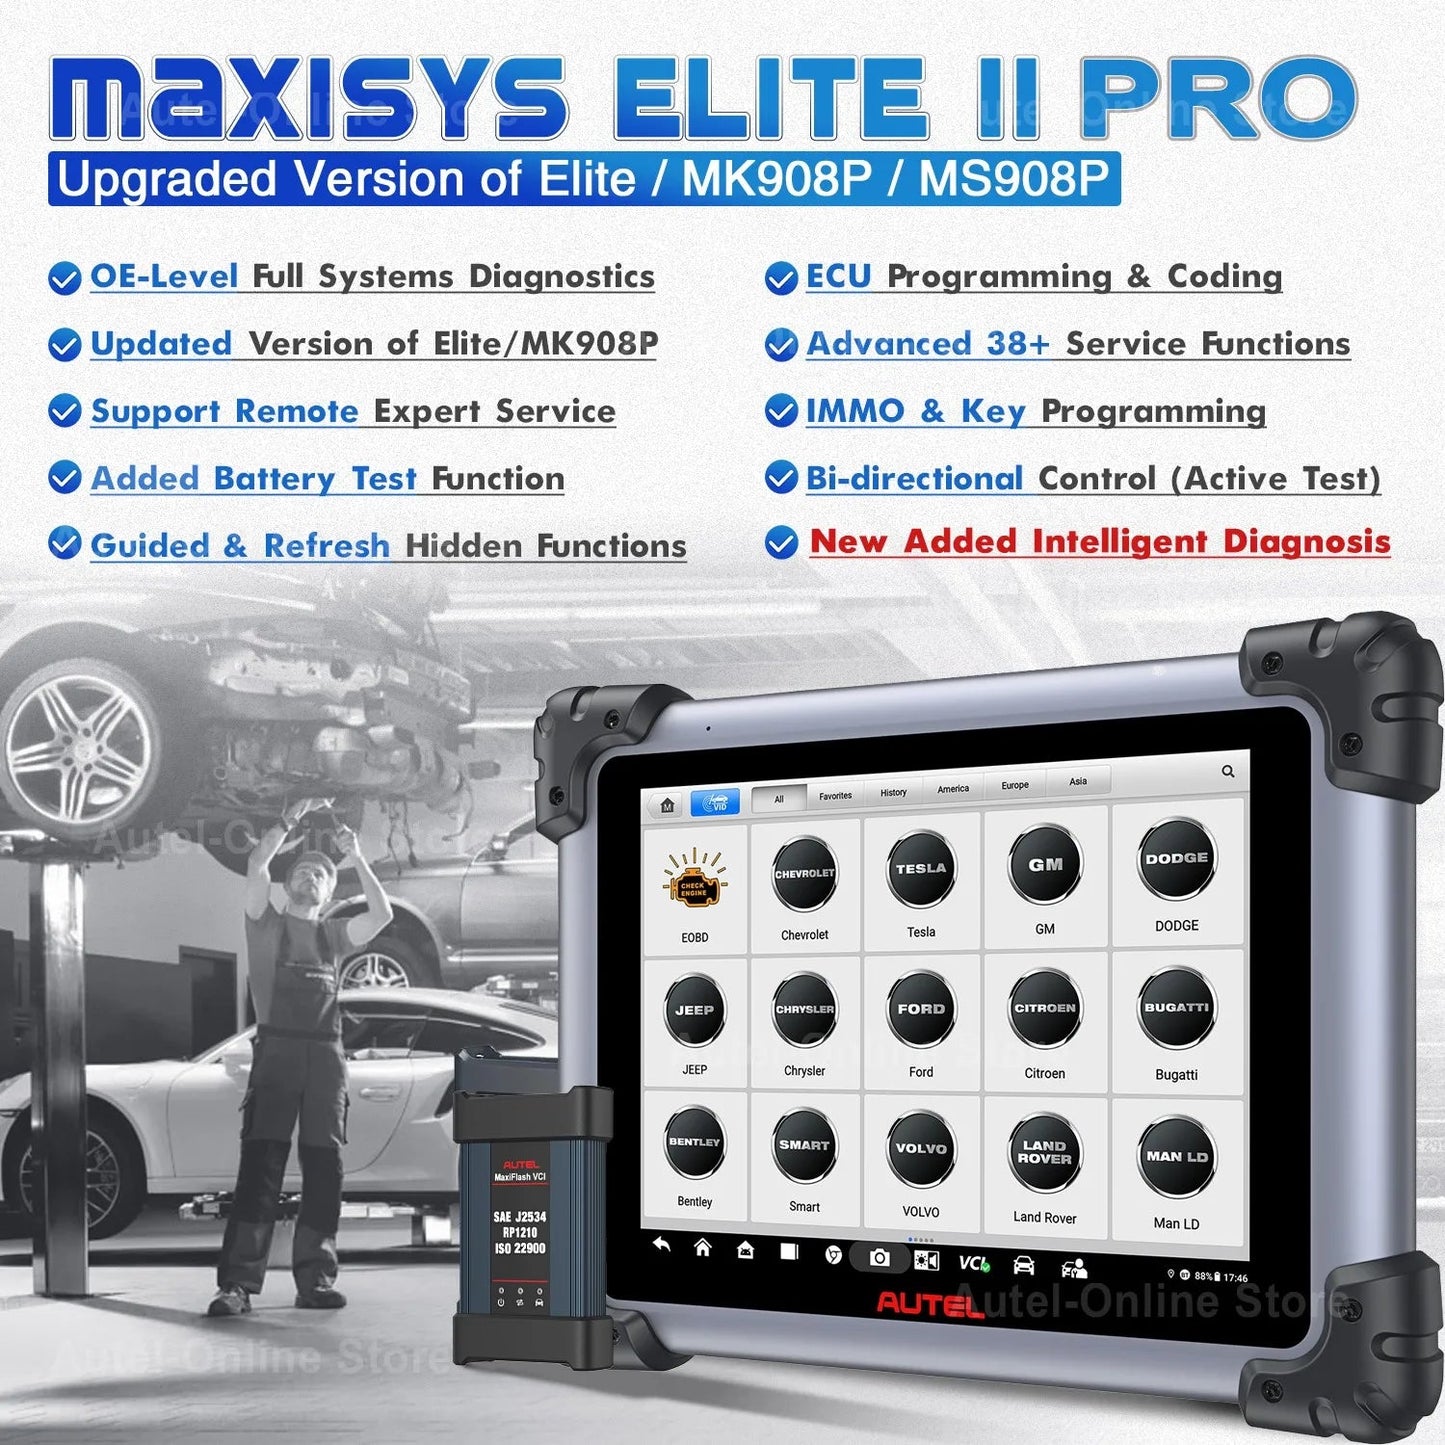 Autel MaxiSys Elite II Pro Intelligent Diagnostic Scan Tool Advanced J2534 ECU Online Programming & Coding, Upgraded of Elite 1 - Dynamex